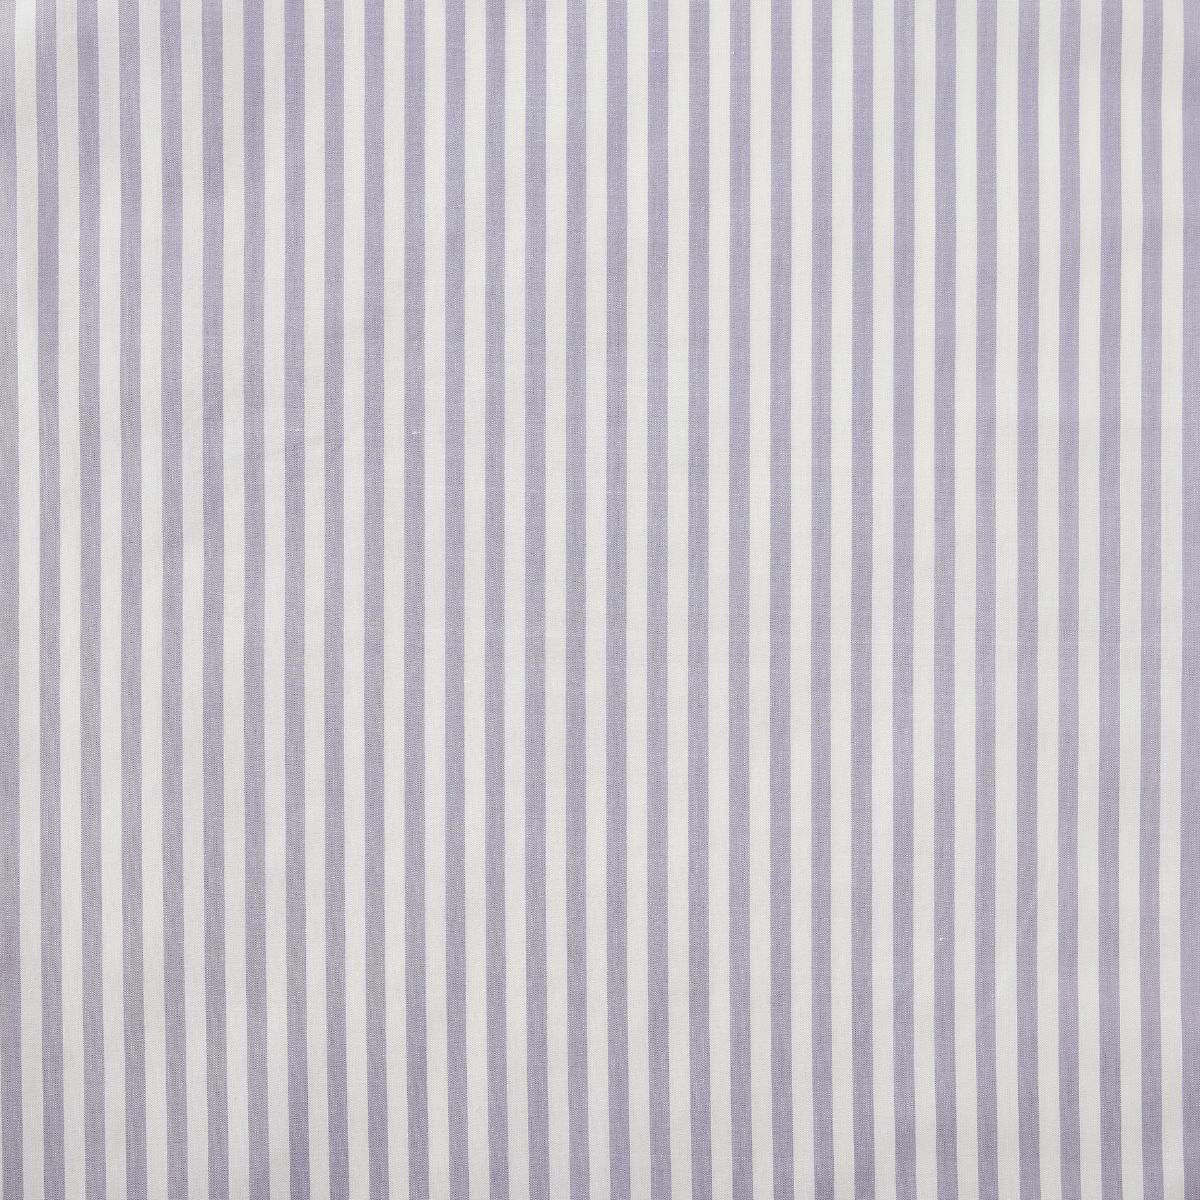 Noelle Stripe in Lilac Fabric Swatch